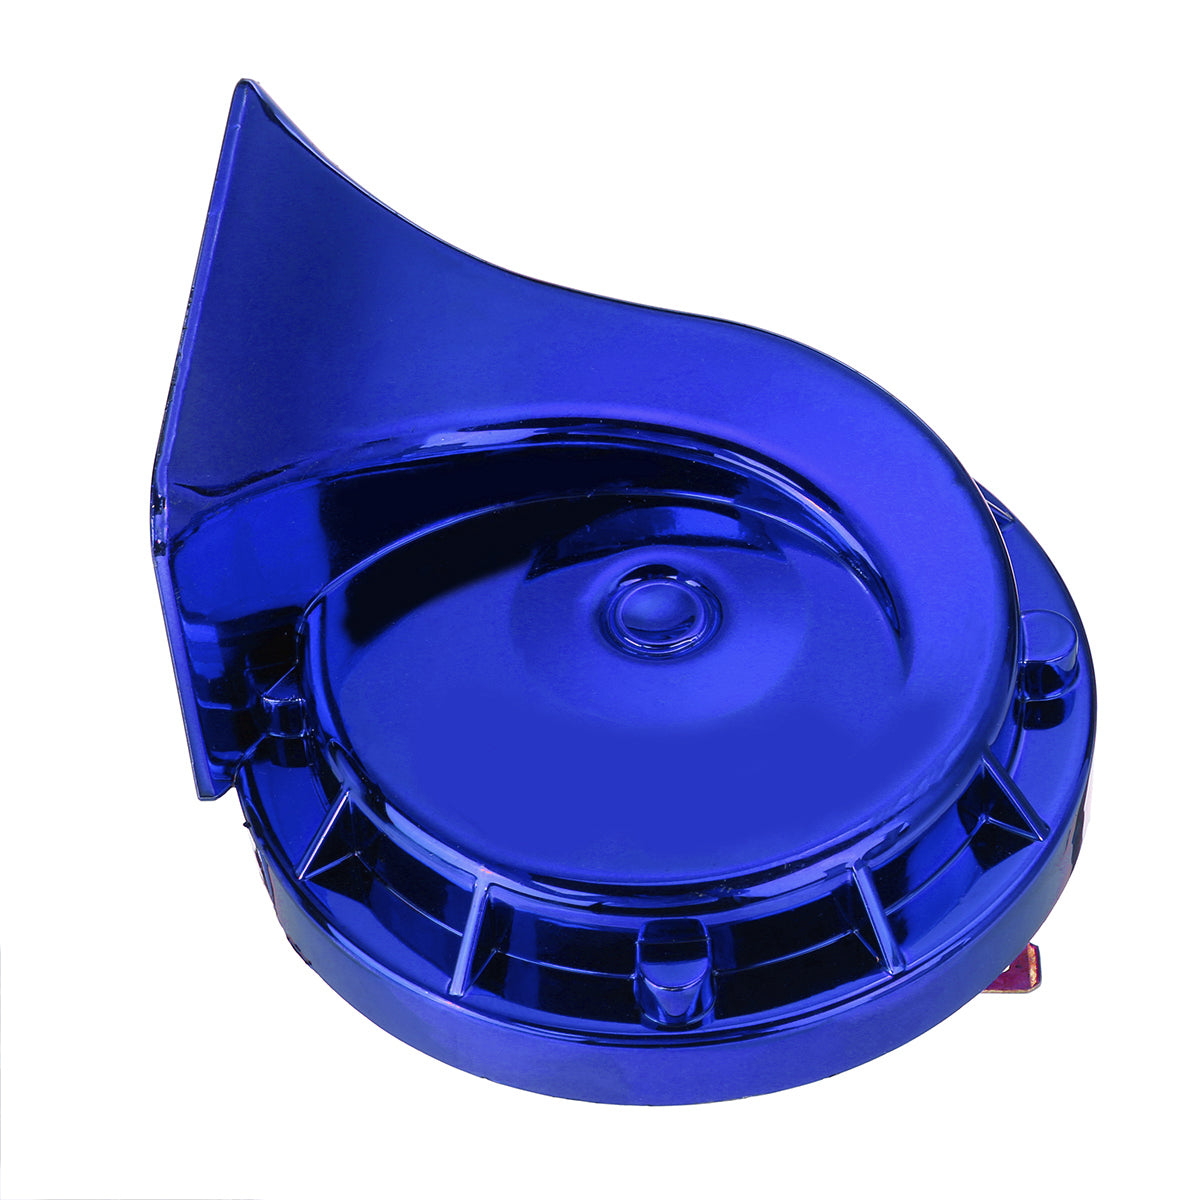 Royal Blue 12V 115dB Snail Air Horn Siren Loud Waterproof For Truck Motorcycle Car Universal